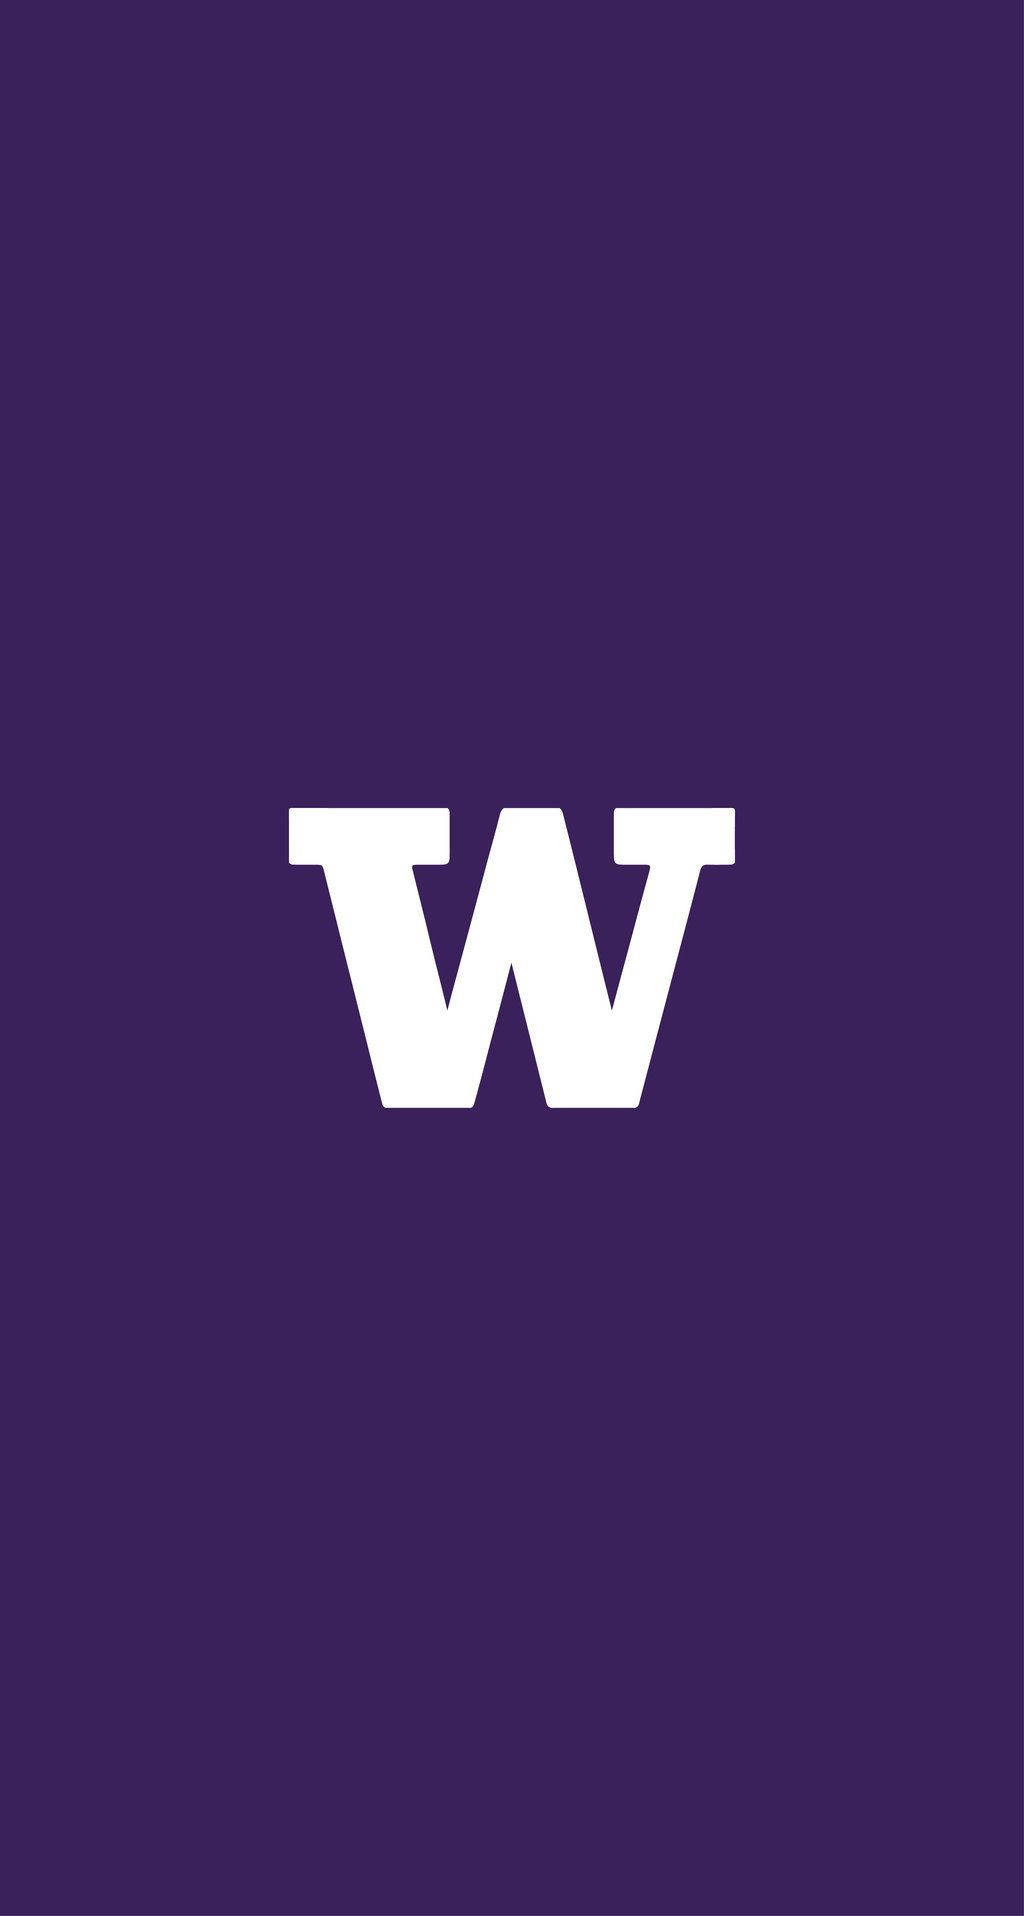 University Of Washington Logo For Phone Wallpaper